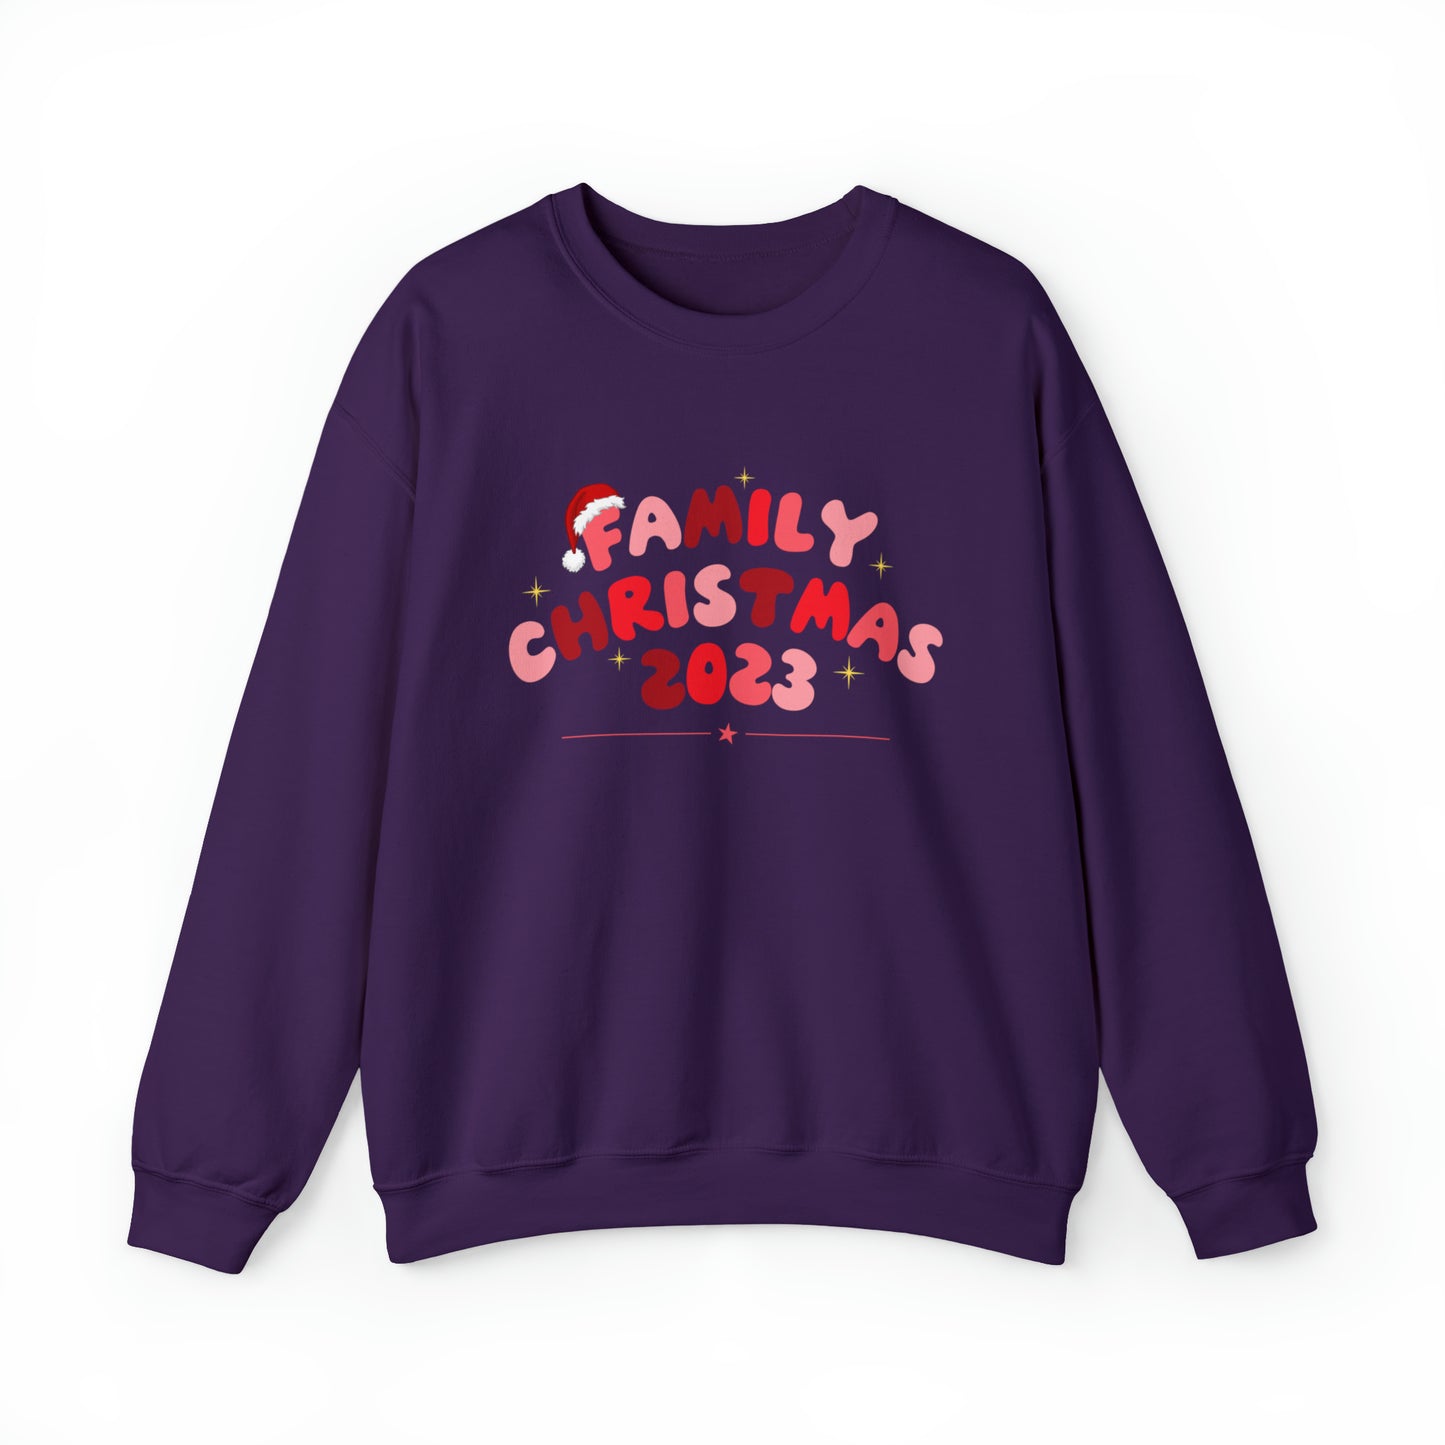 Family Christmas 2023 Sweatshirt | Matching Christmas Jumpers For Men, Women, Families | Xmas Gift | Christmas Sweater Fun Unique